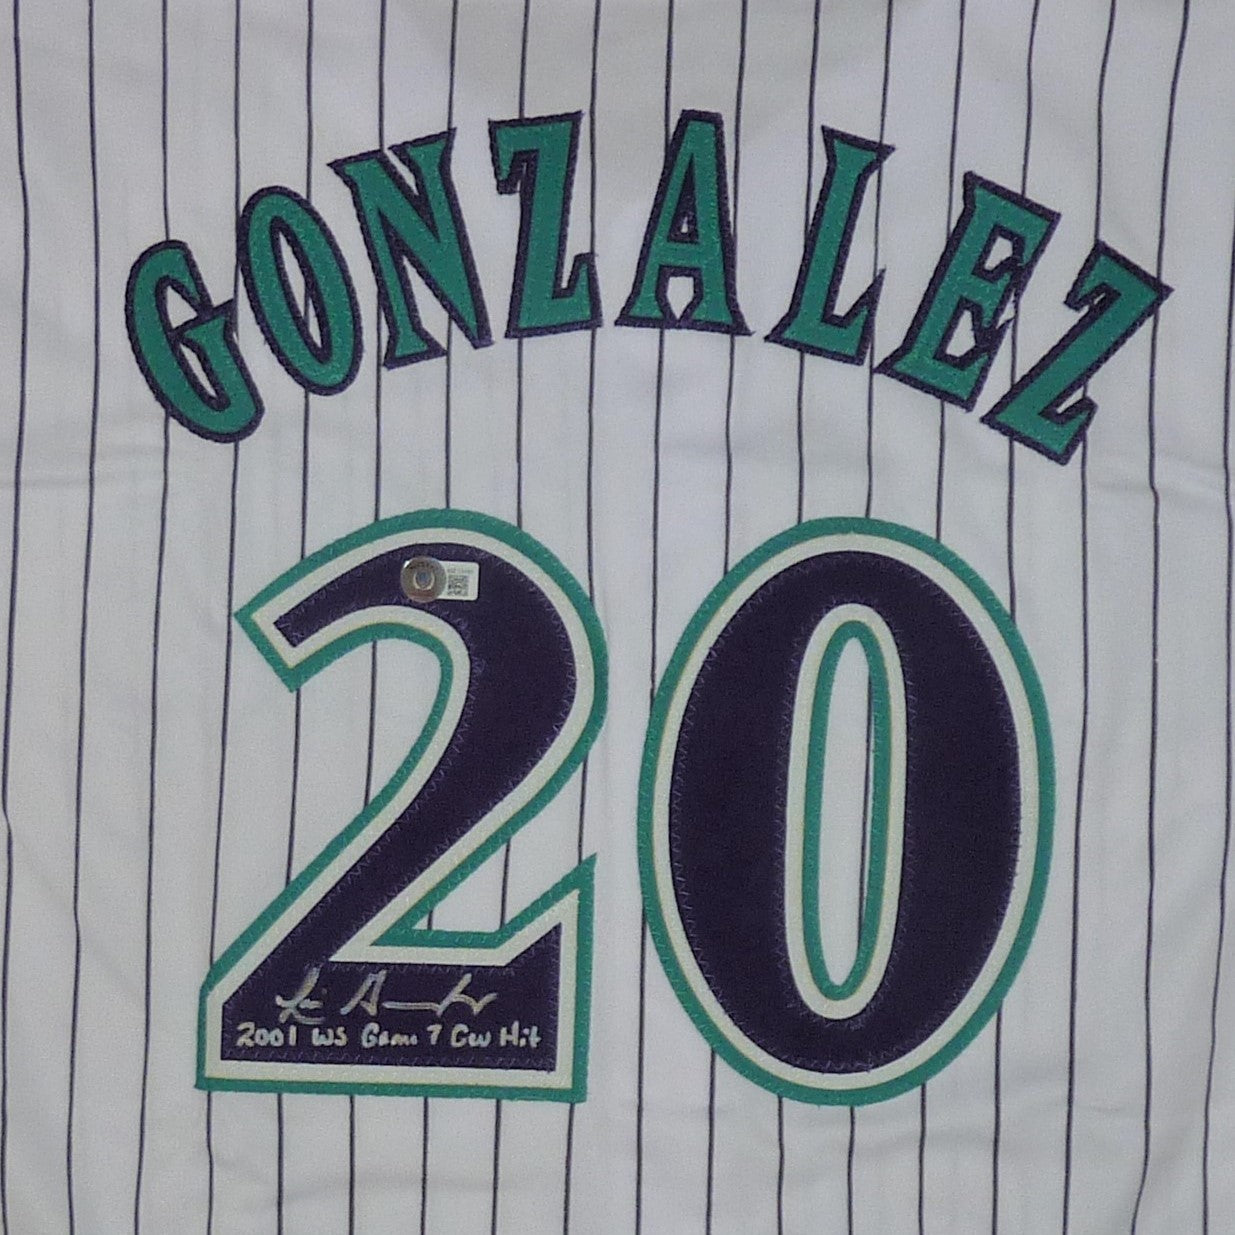 Luis Gonzalez Autographed Arizona (Pinstripe #20) Jersey with "2001 WS G7 GW Hit" -BAS Witnessed